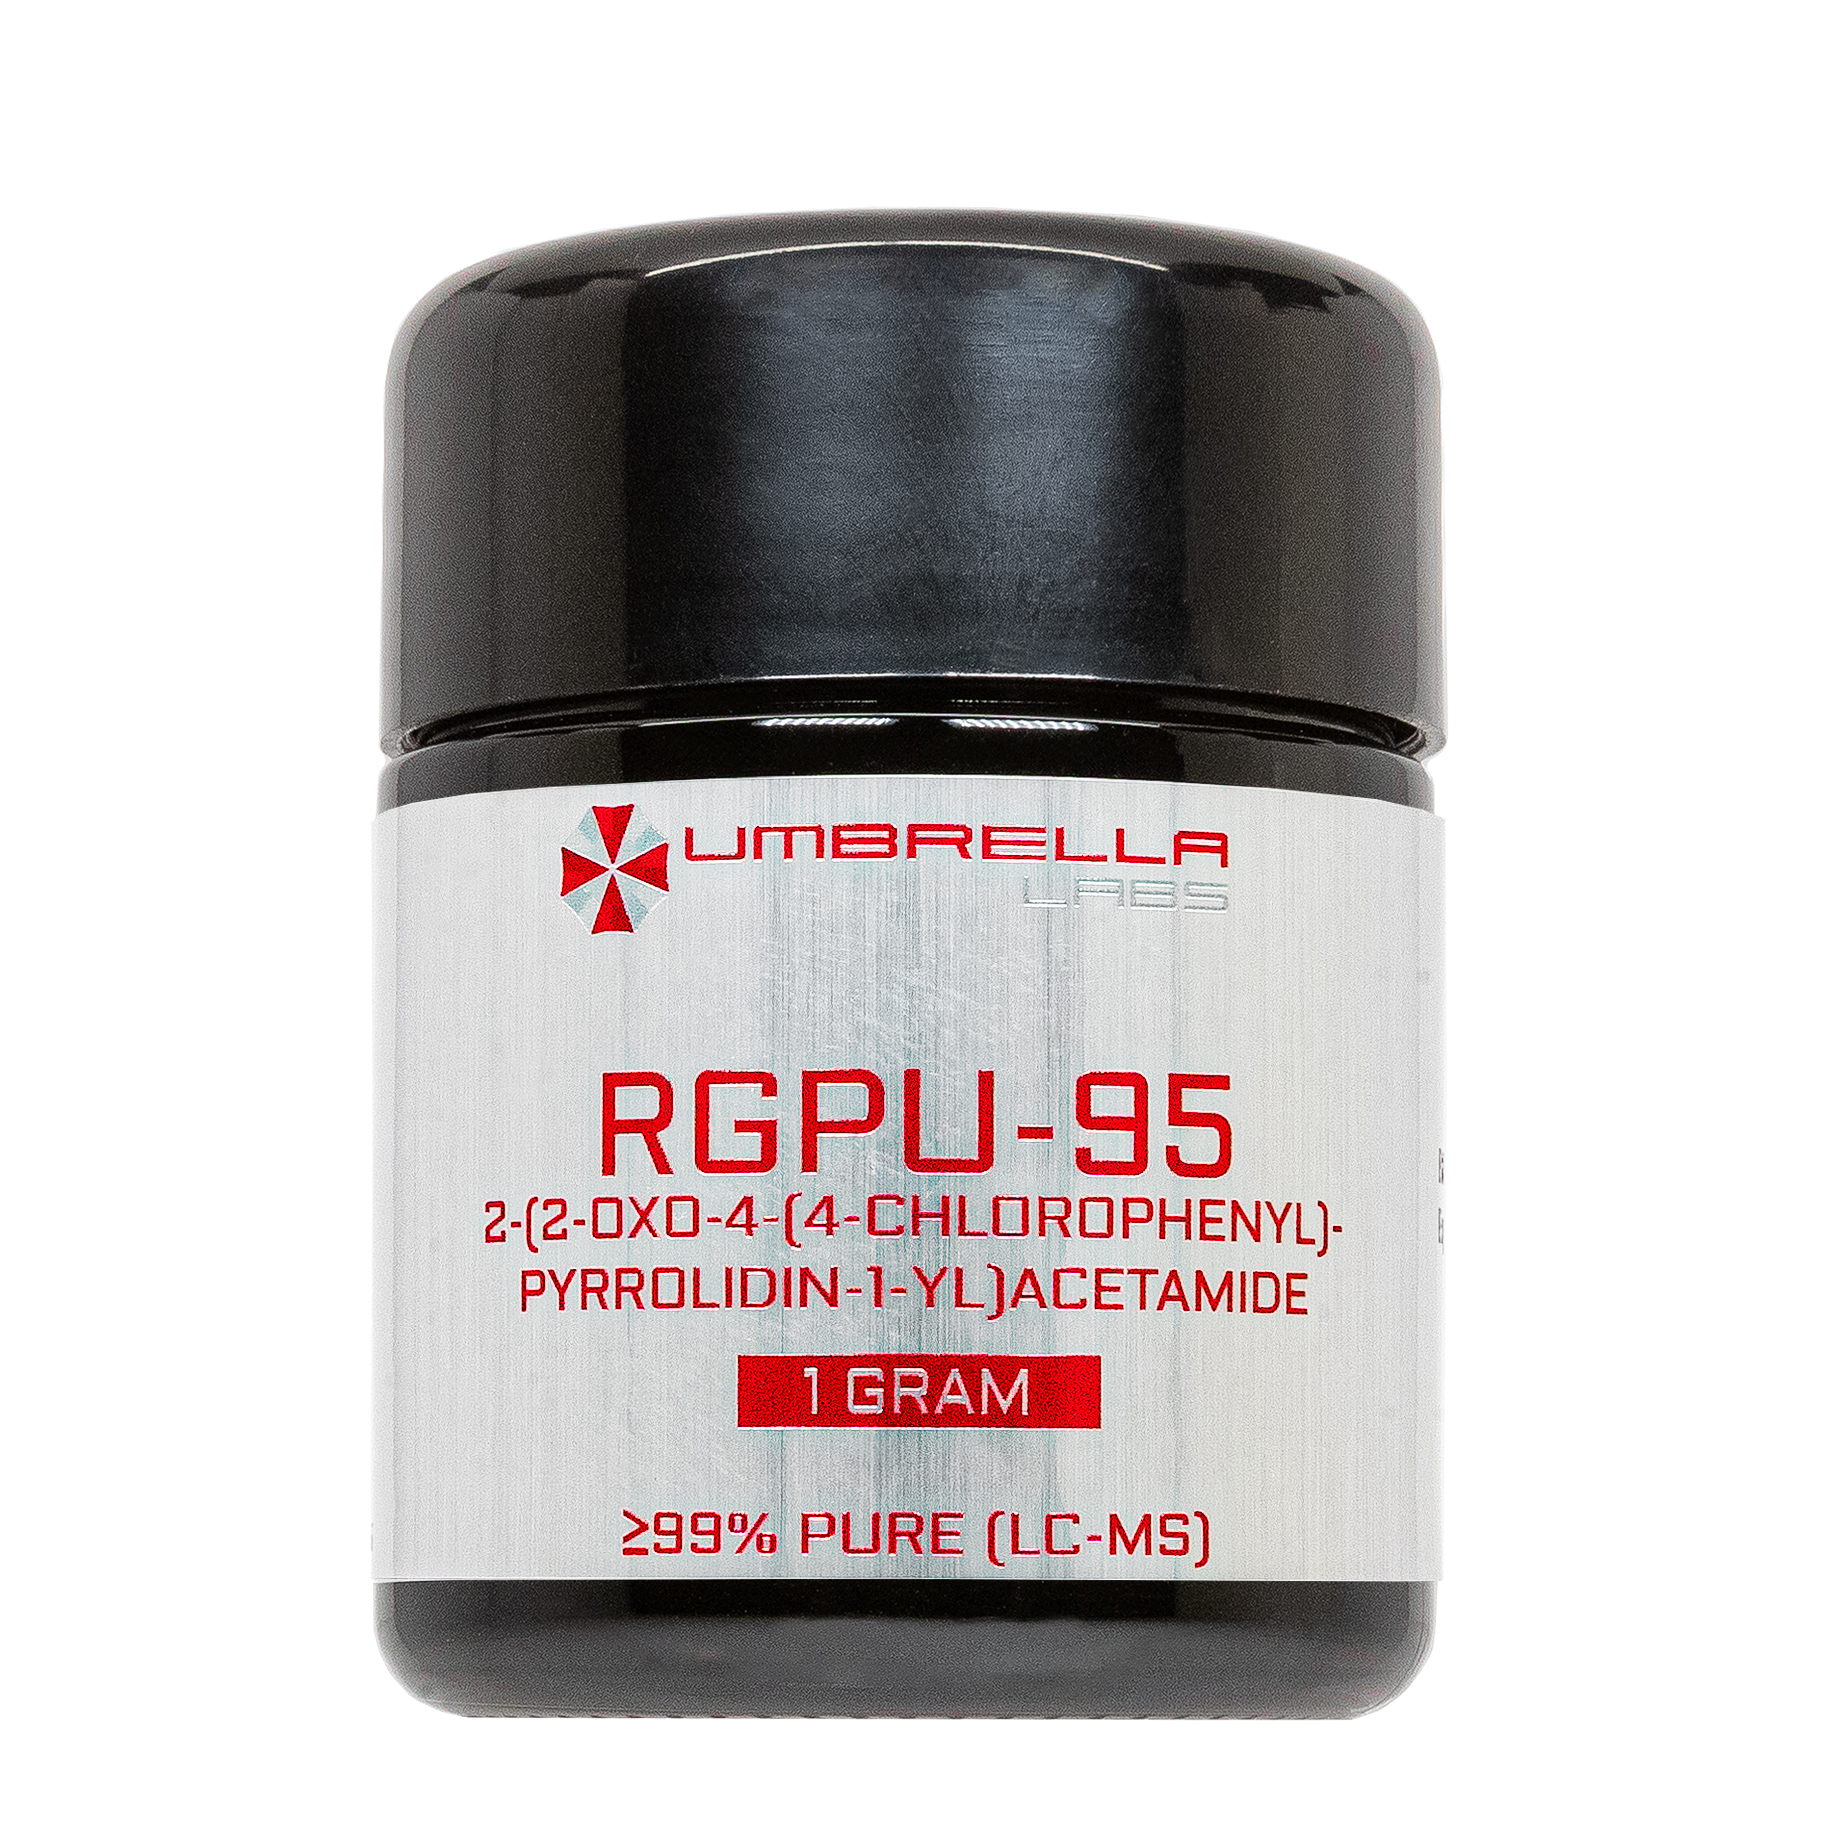 rgpu 95 powder